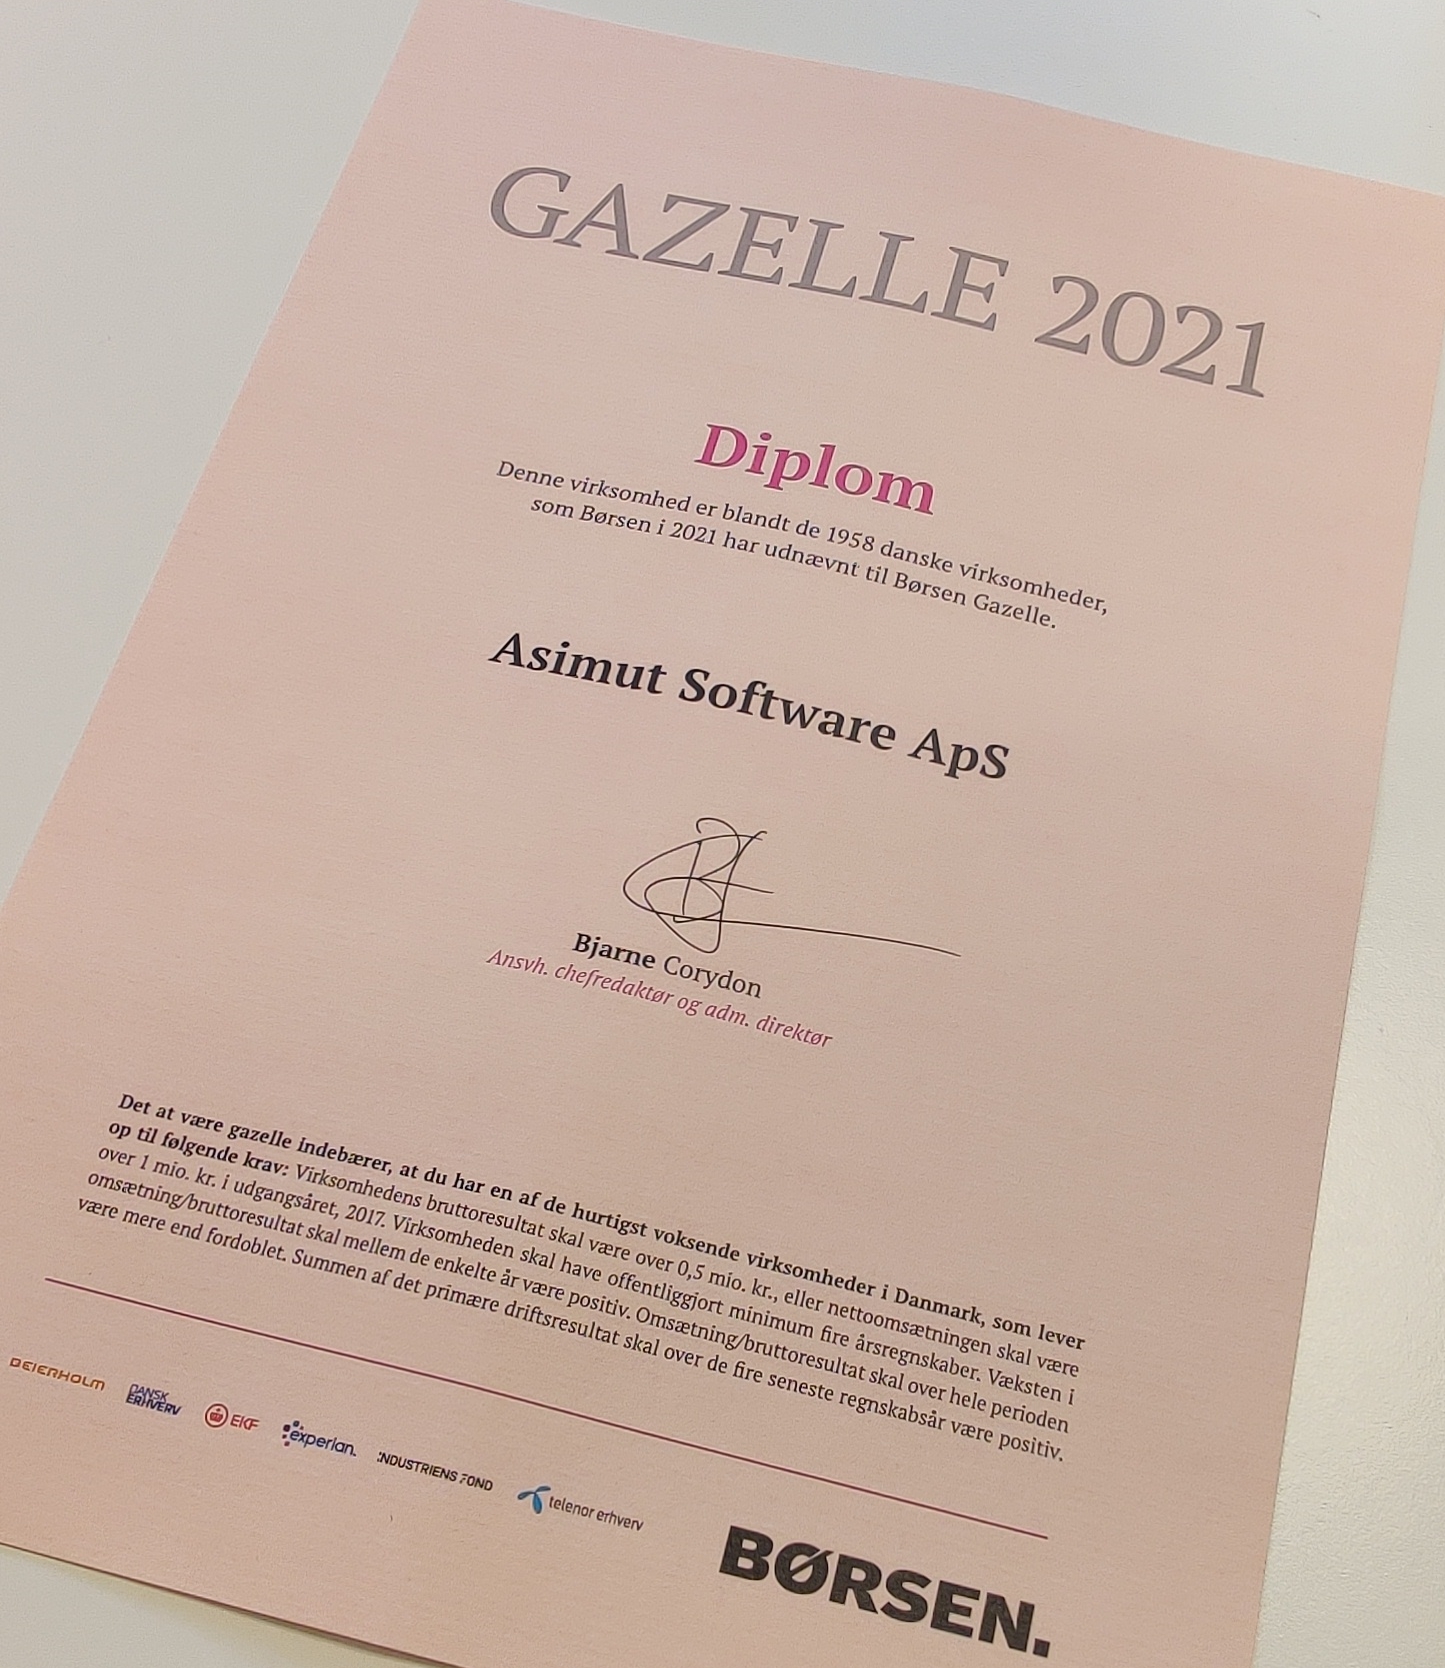 Gazelle 2021 diploma